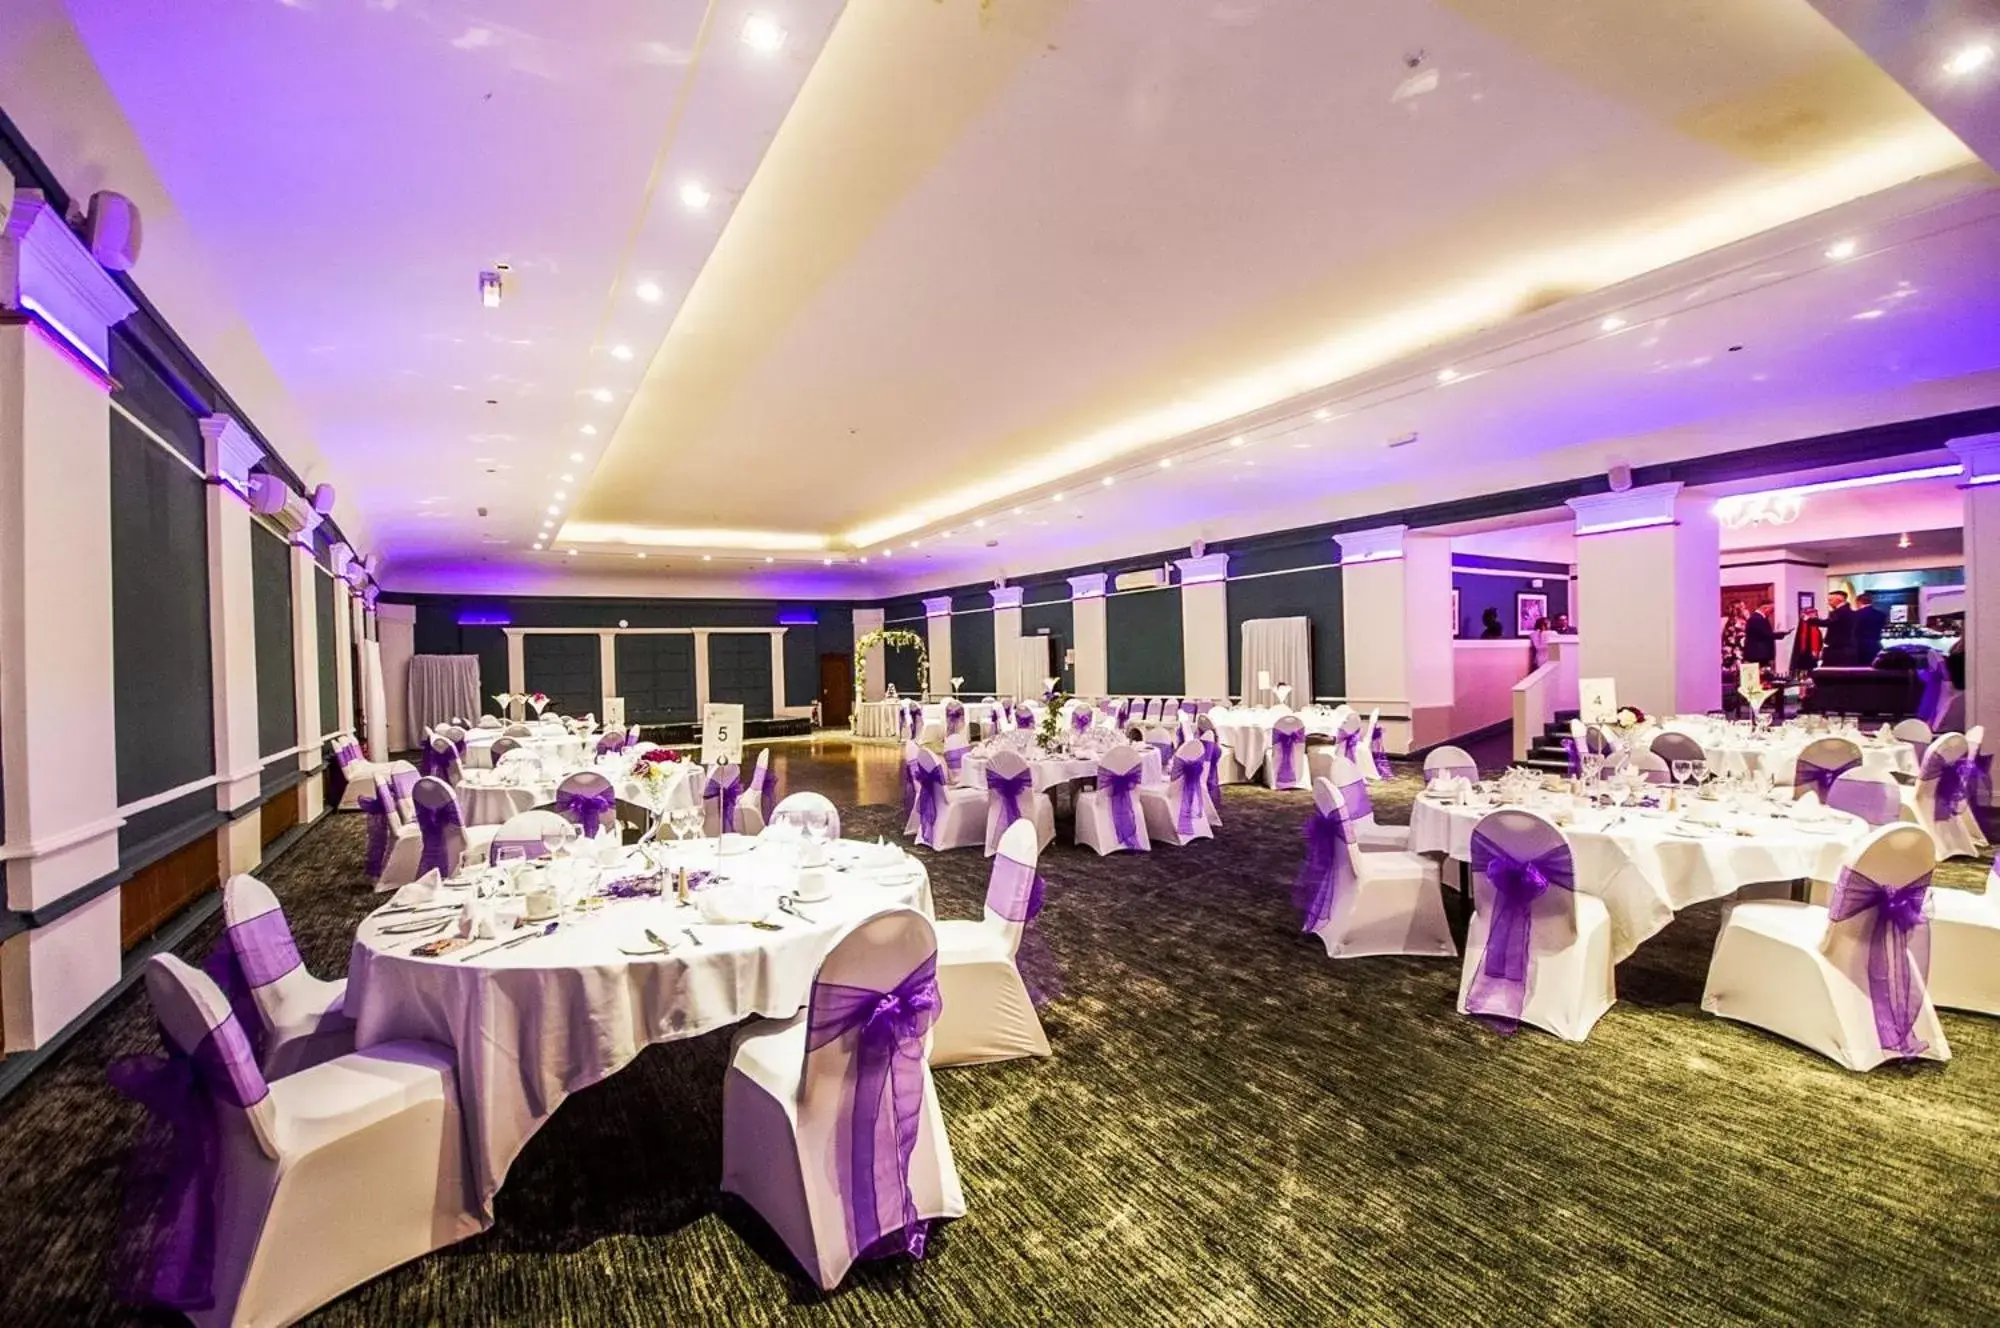 Banquet/Function facilities, Banquet Facilities in Aberdeen Douglas Hotel